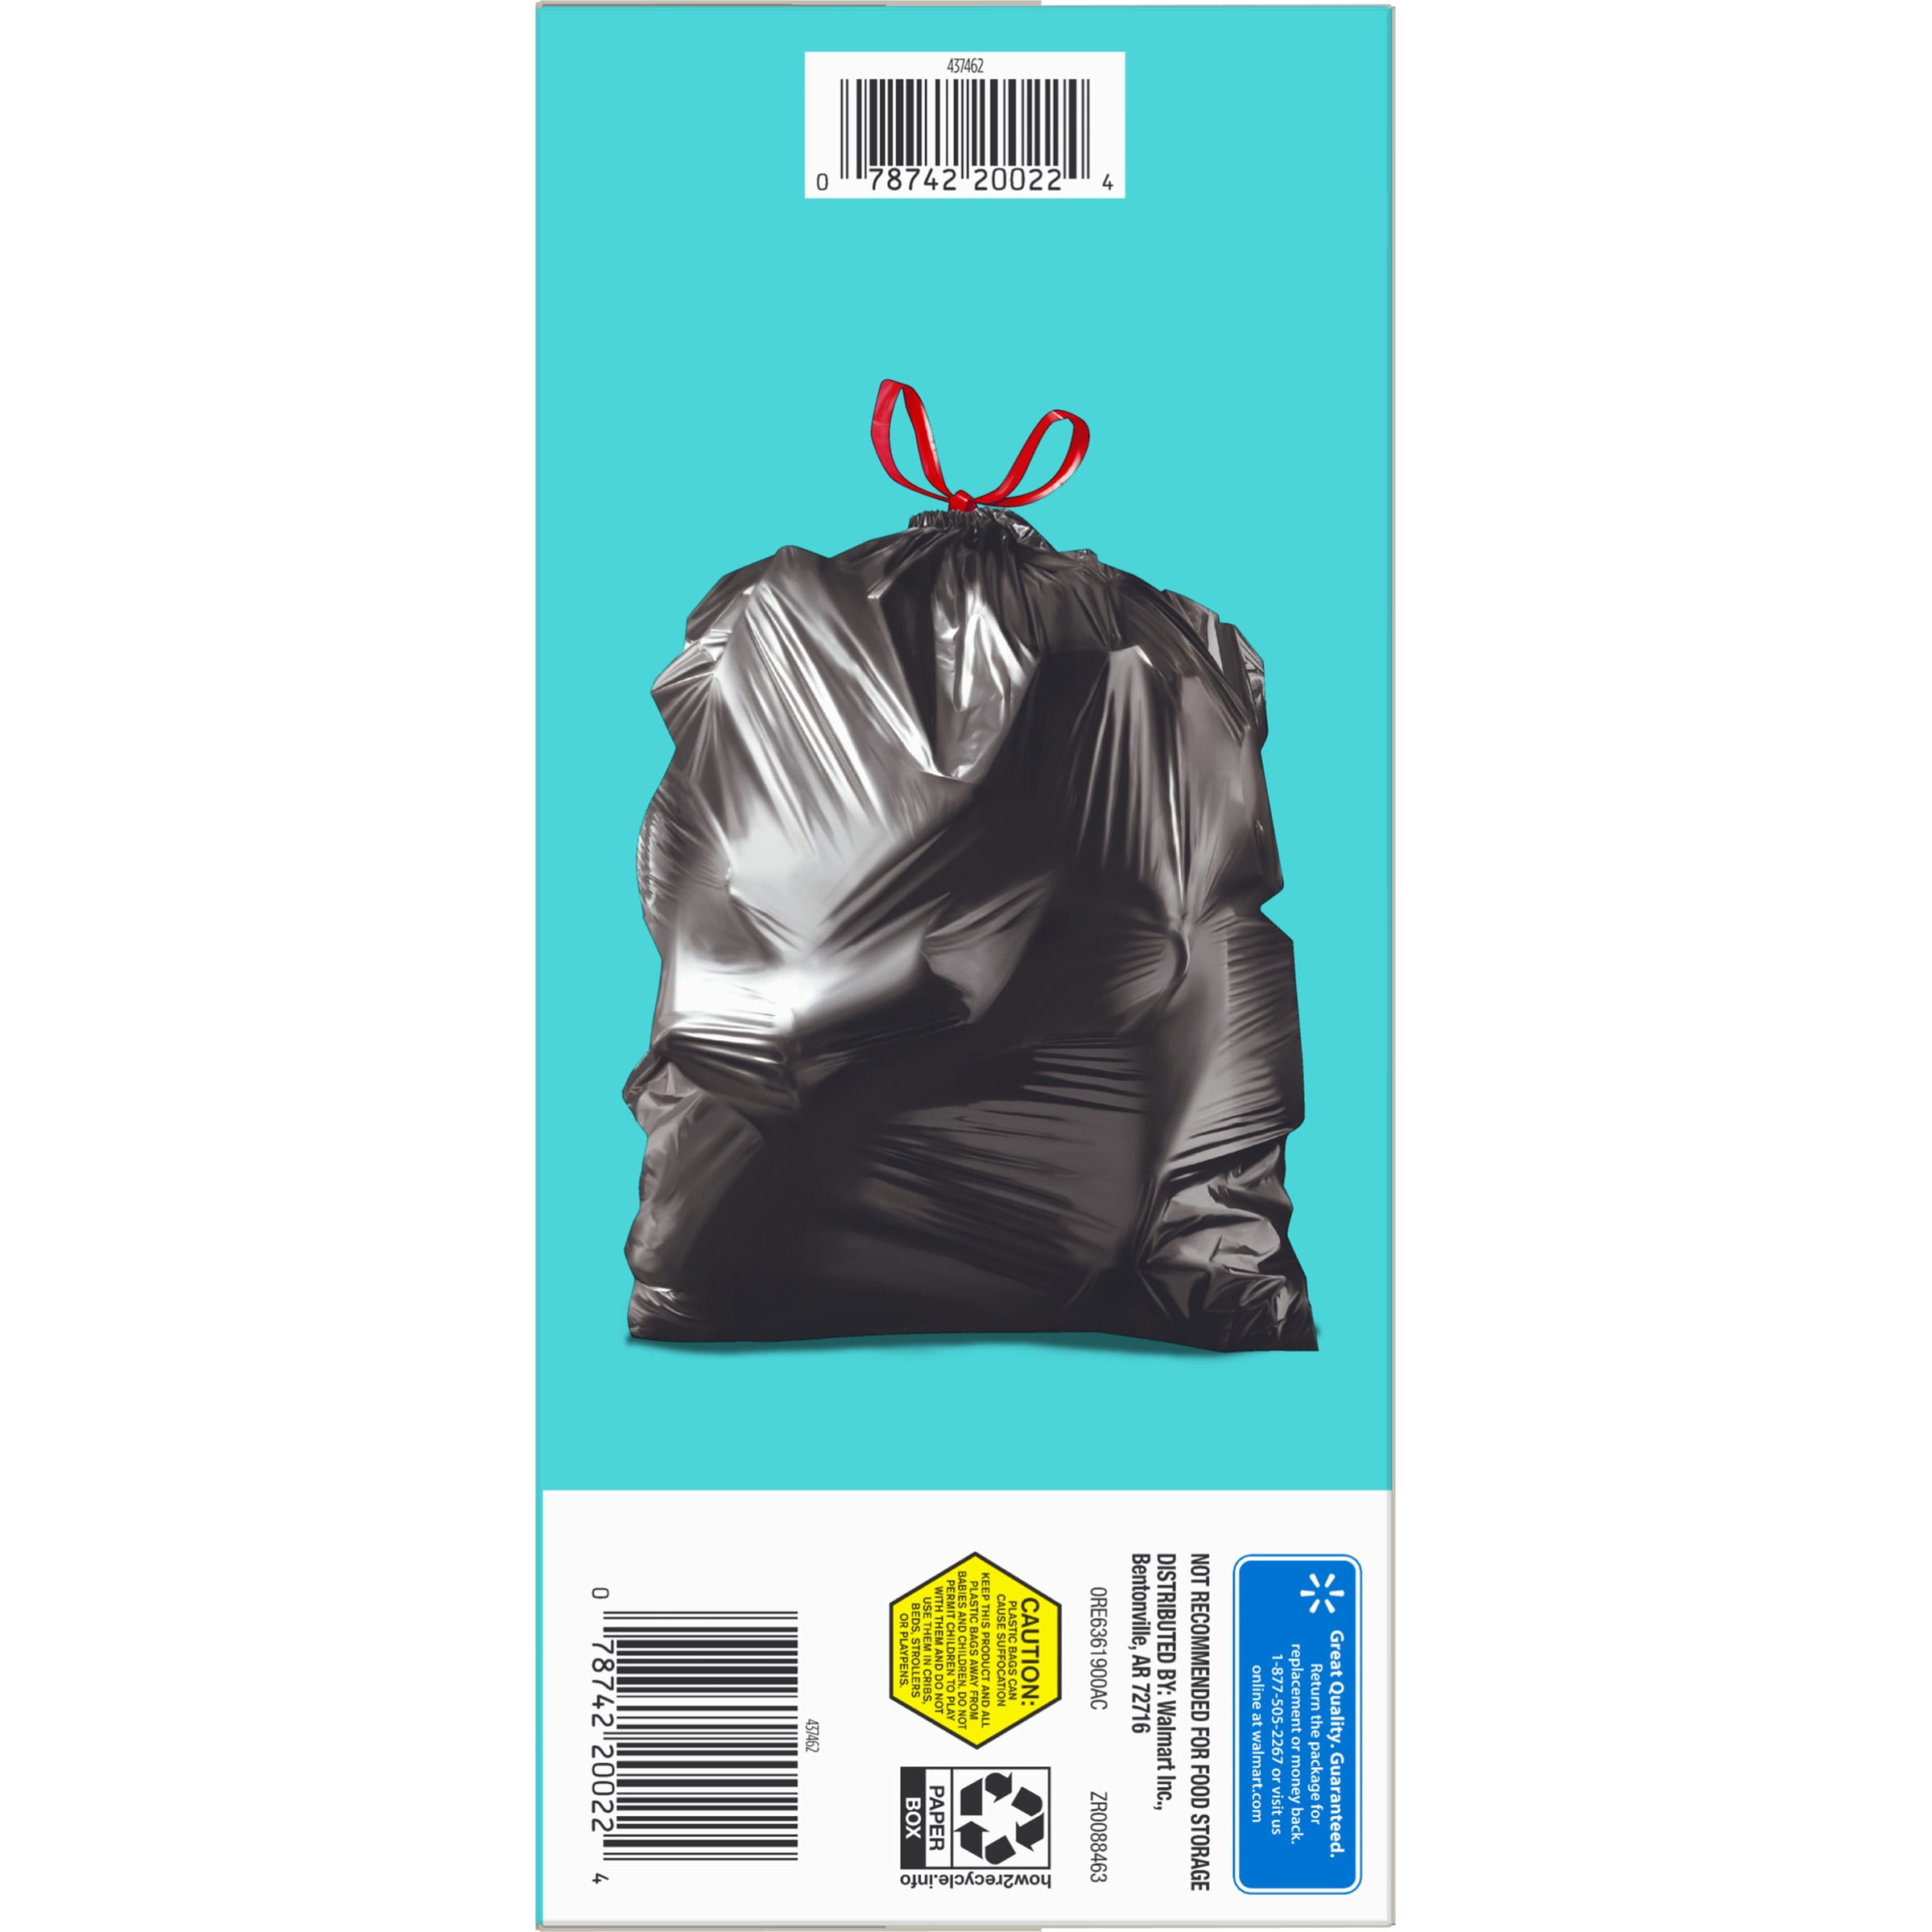 Safeguard® Drawstring Trash Bags 30 Gal. 8-COUNT